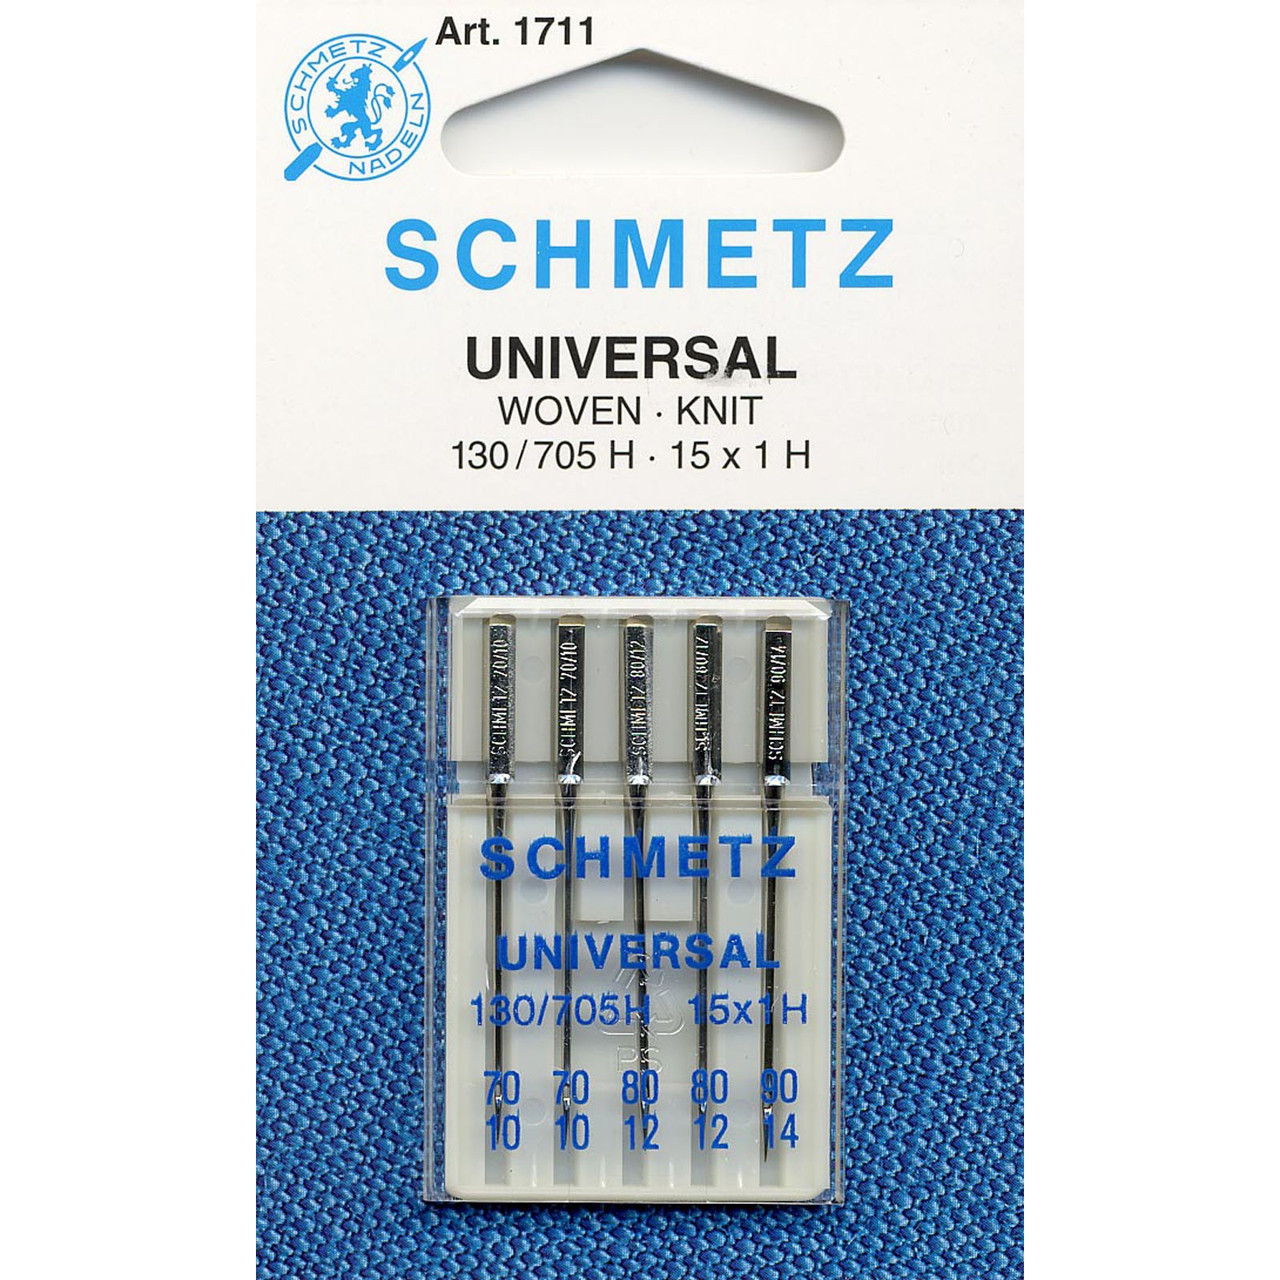 Schmetz Universal Needles - 80/12